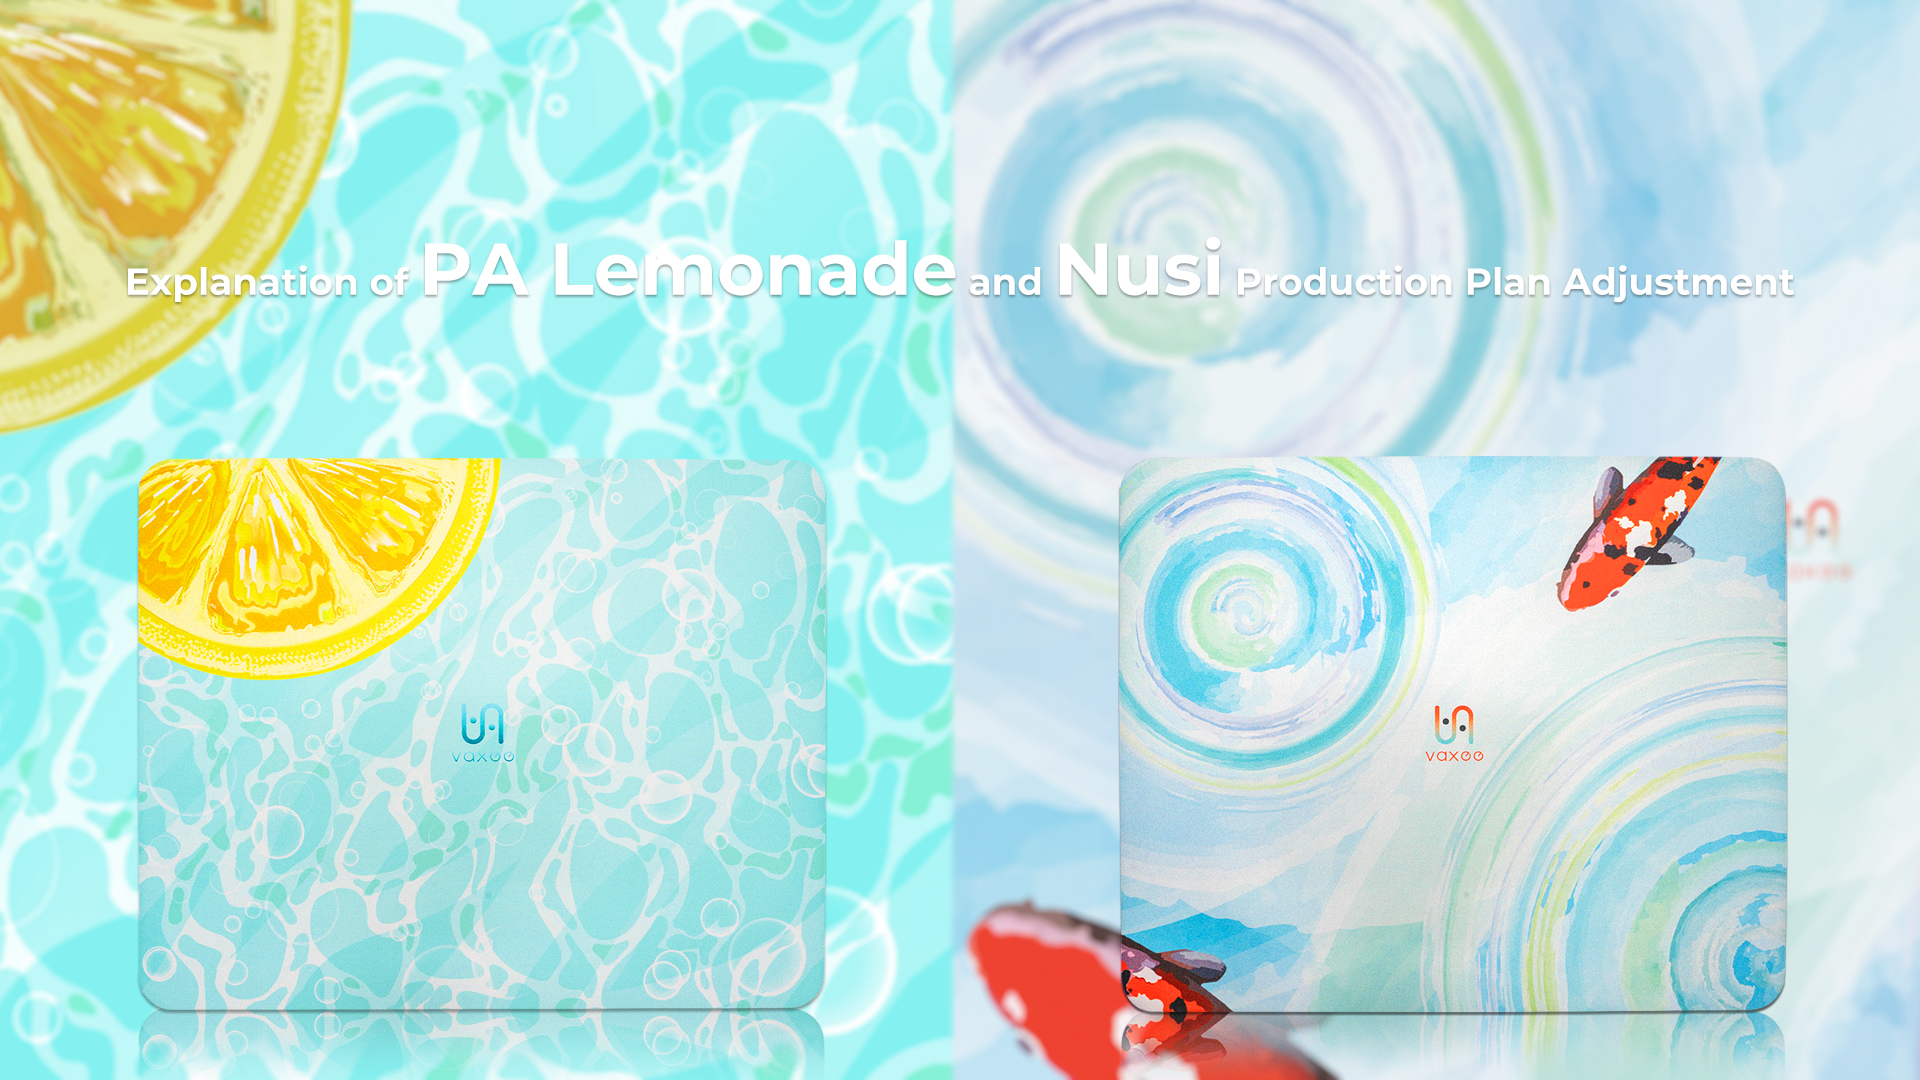 Explanation of PA Lemonade and Nusi Production Plan